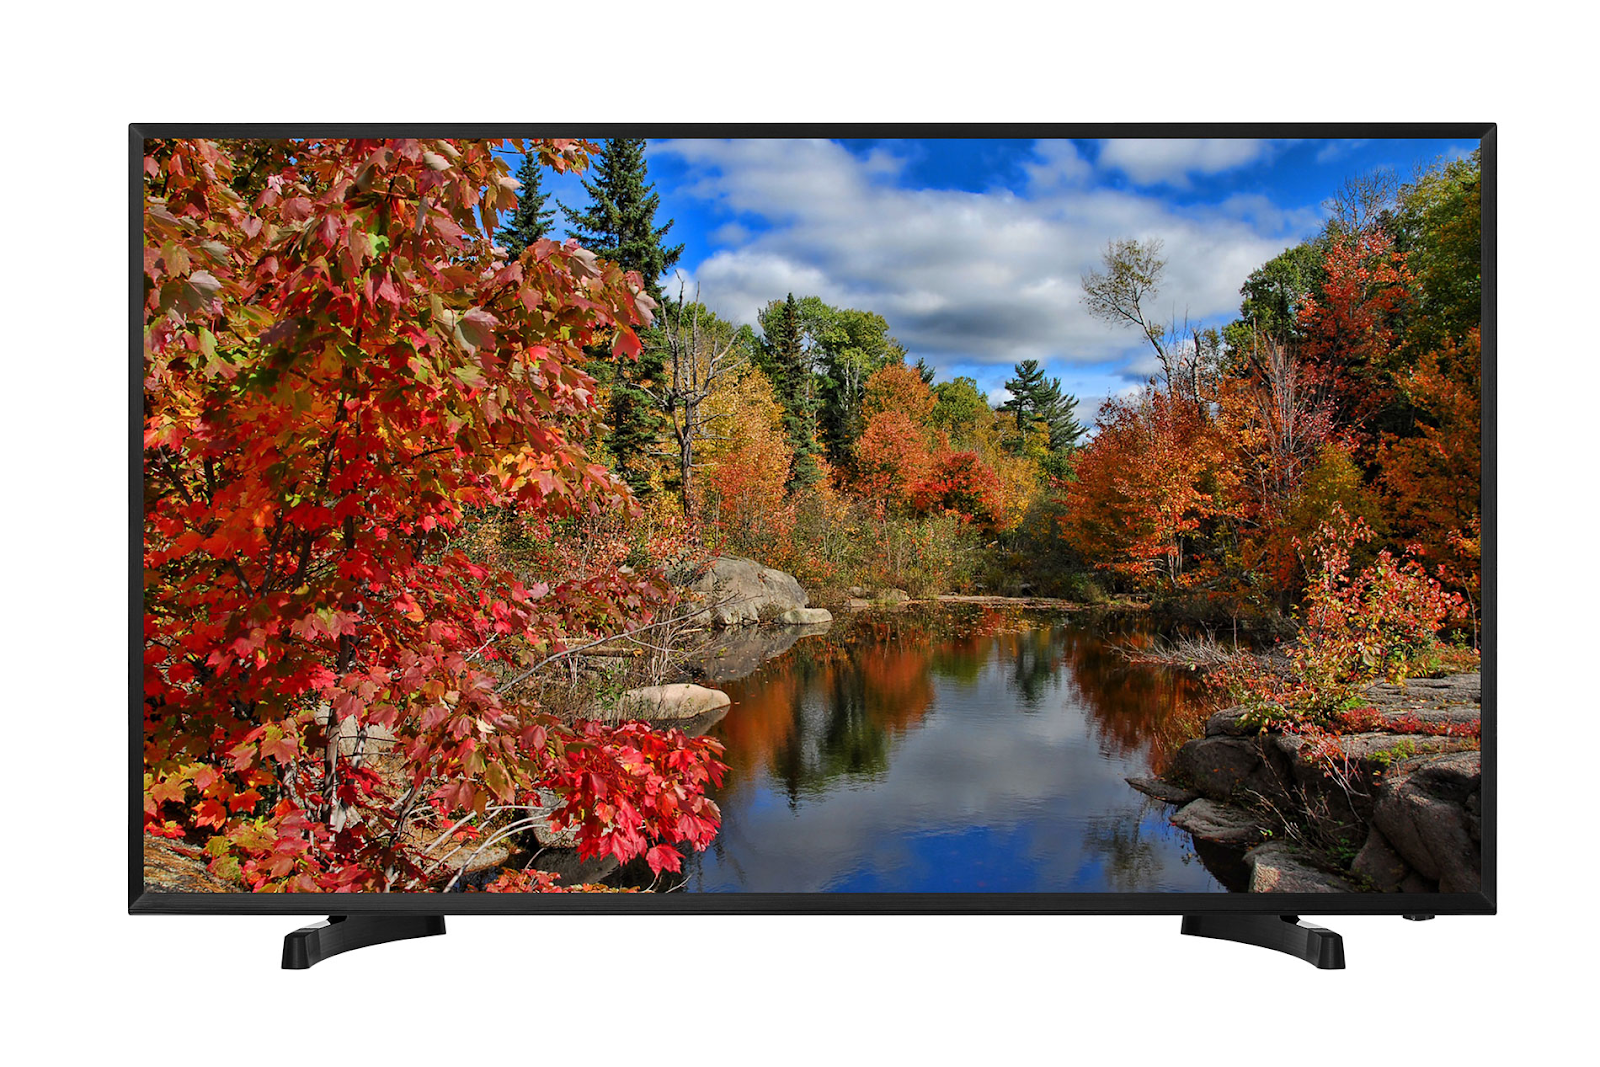 Hisense 43 Inch Full HD LED TV - HX43M2160F - (Black)